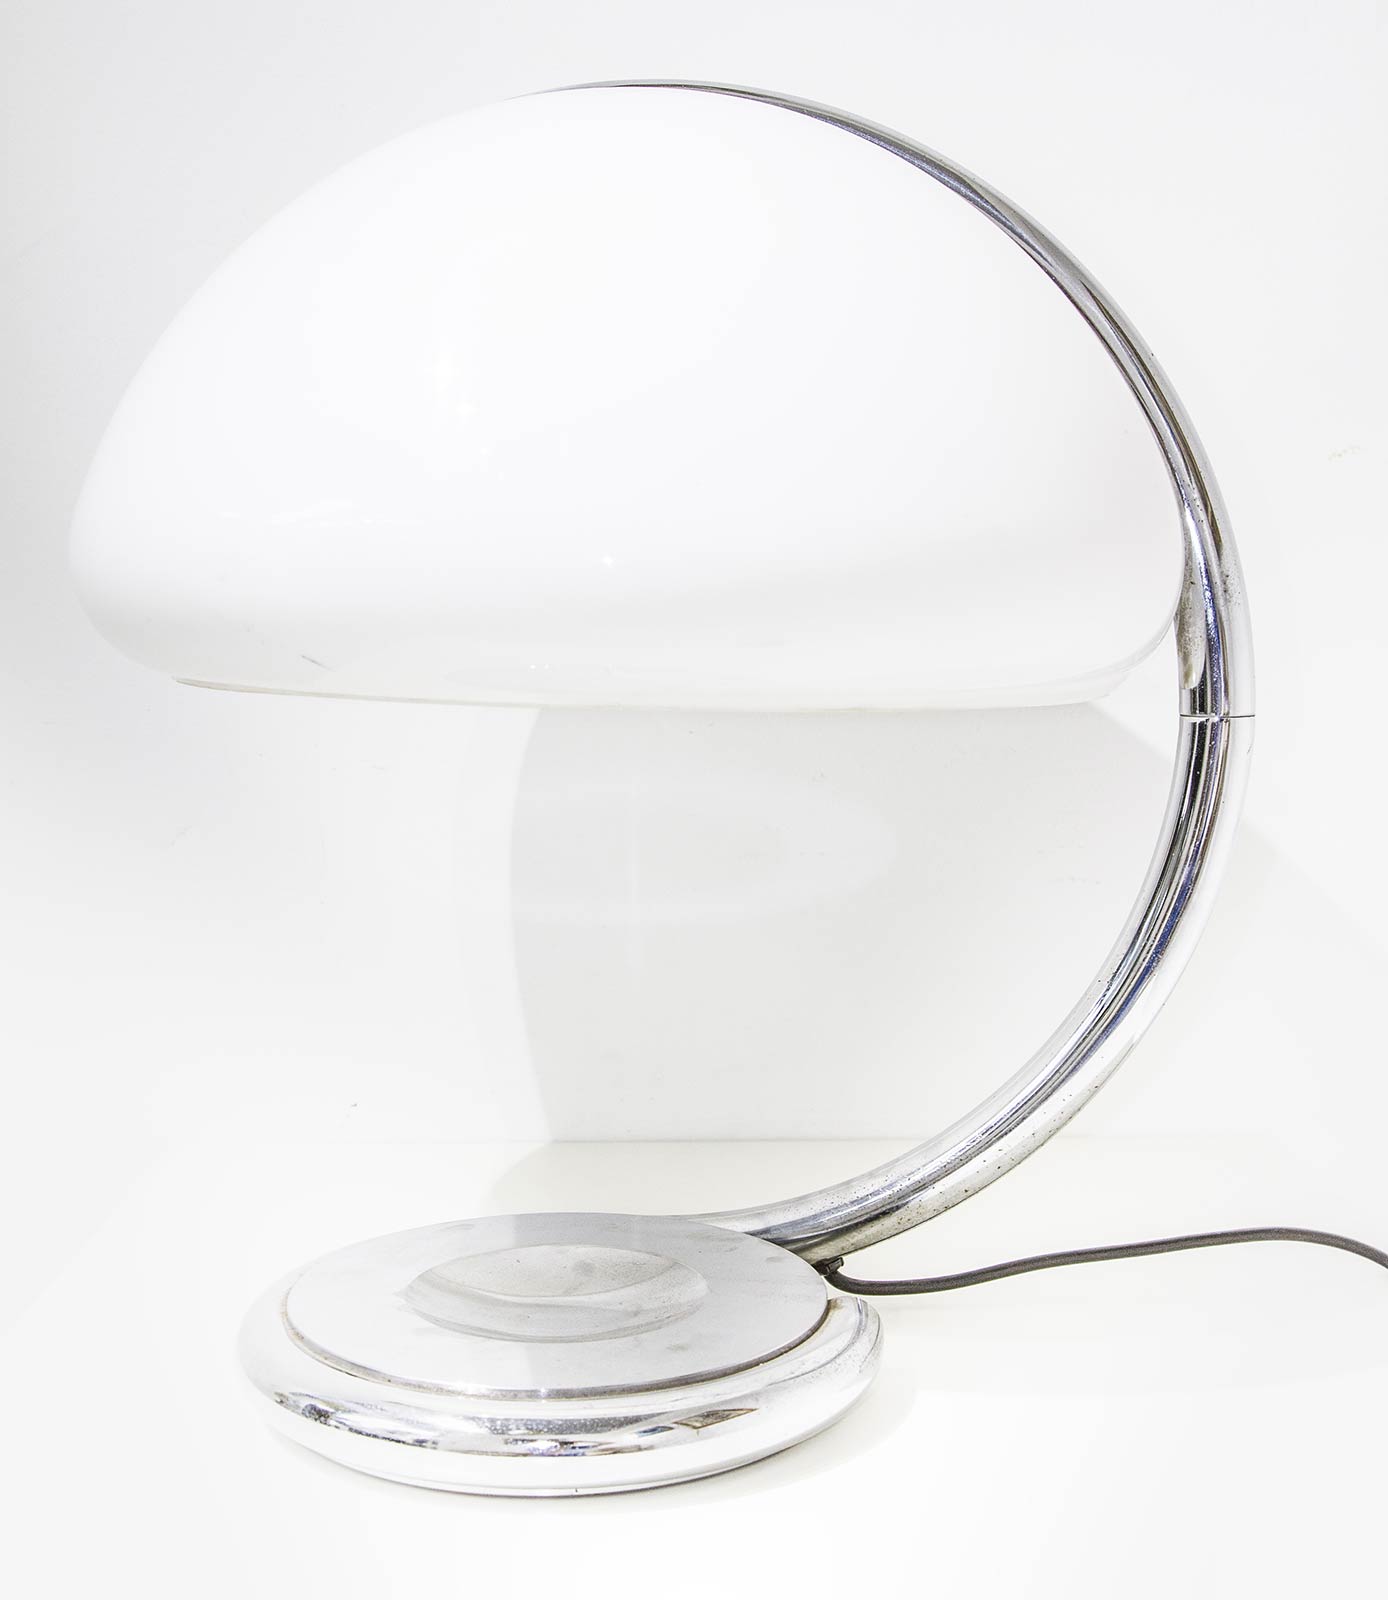 Martinelli. Designed by Elio Marinelli, Cobra model. Chrome metal structure. Table lamp. Perspex